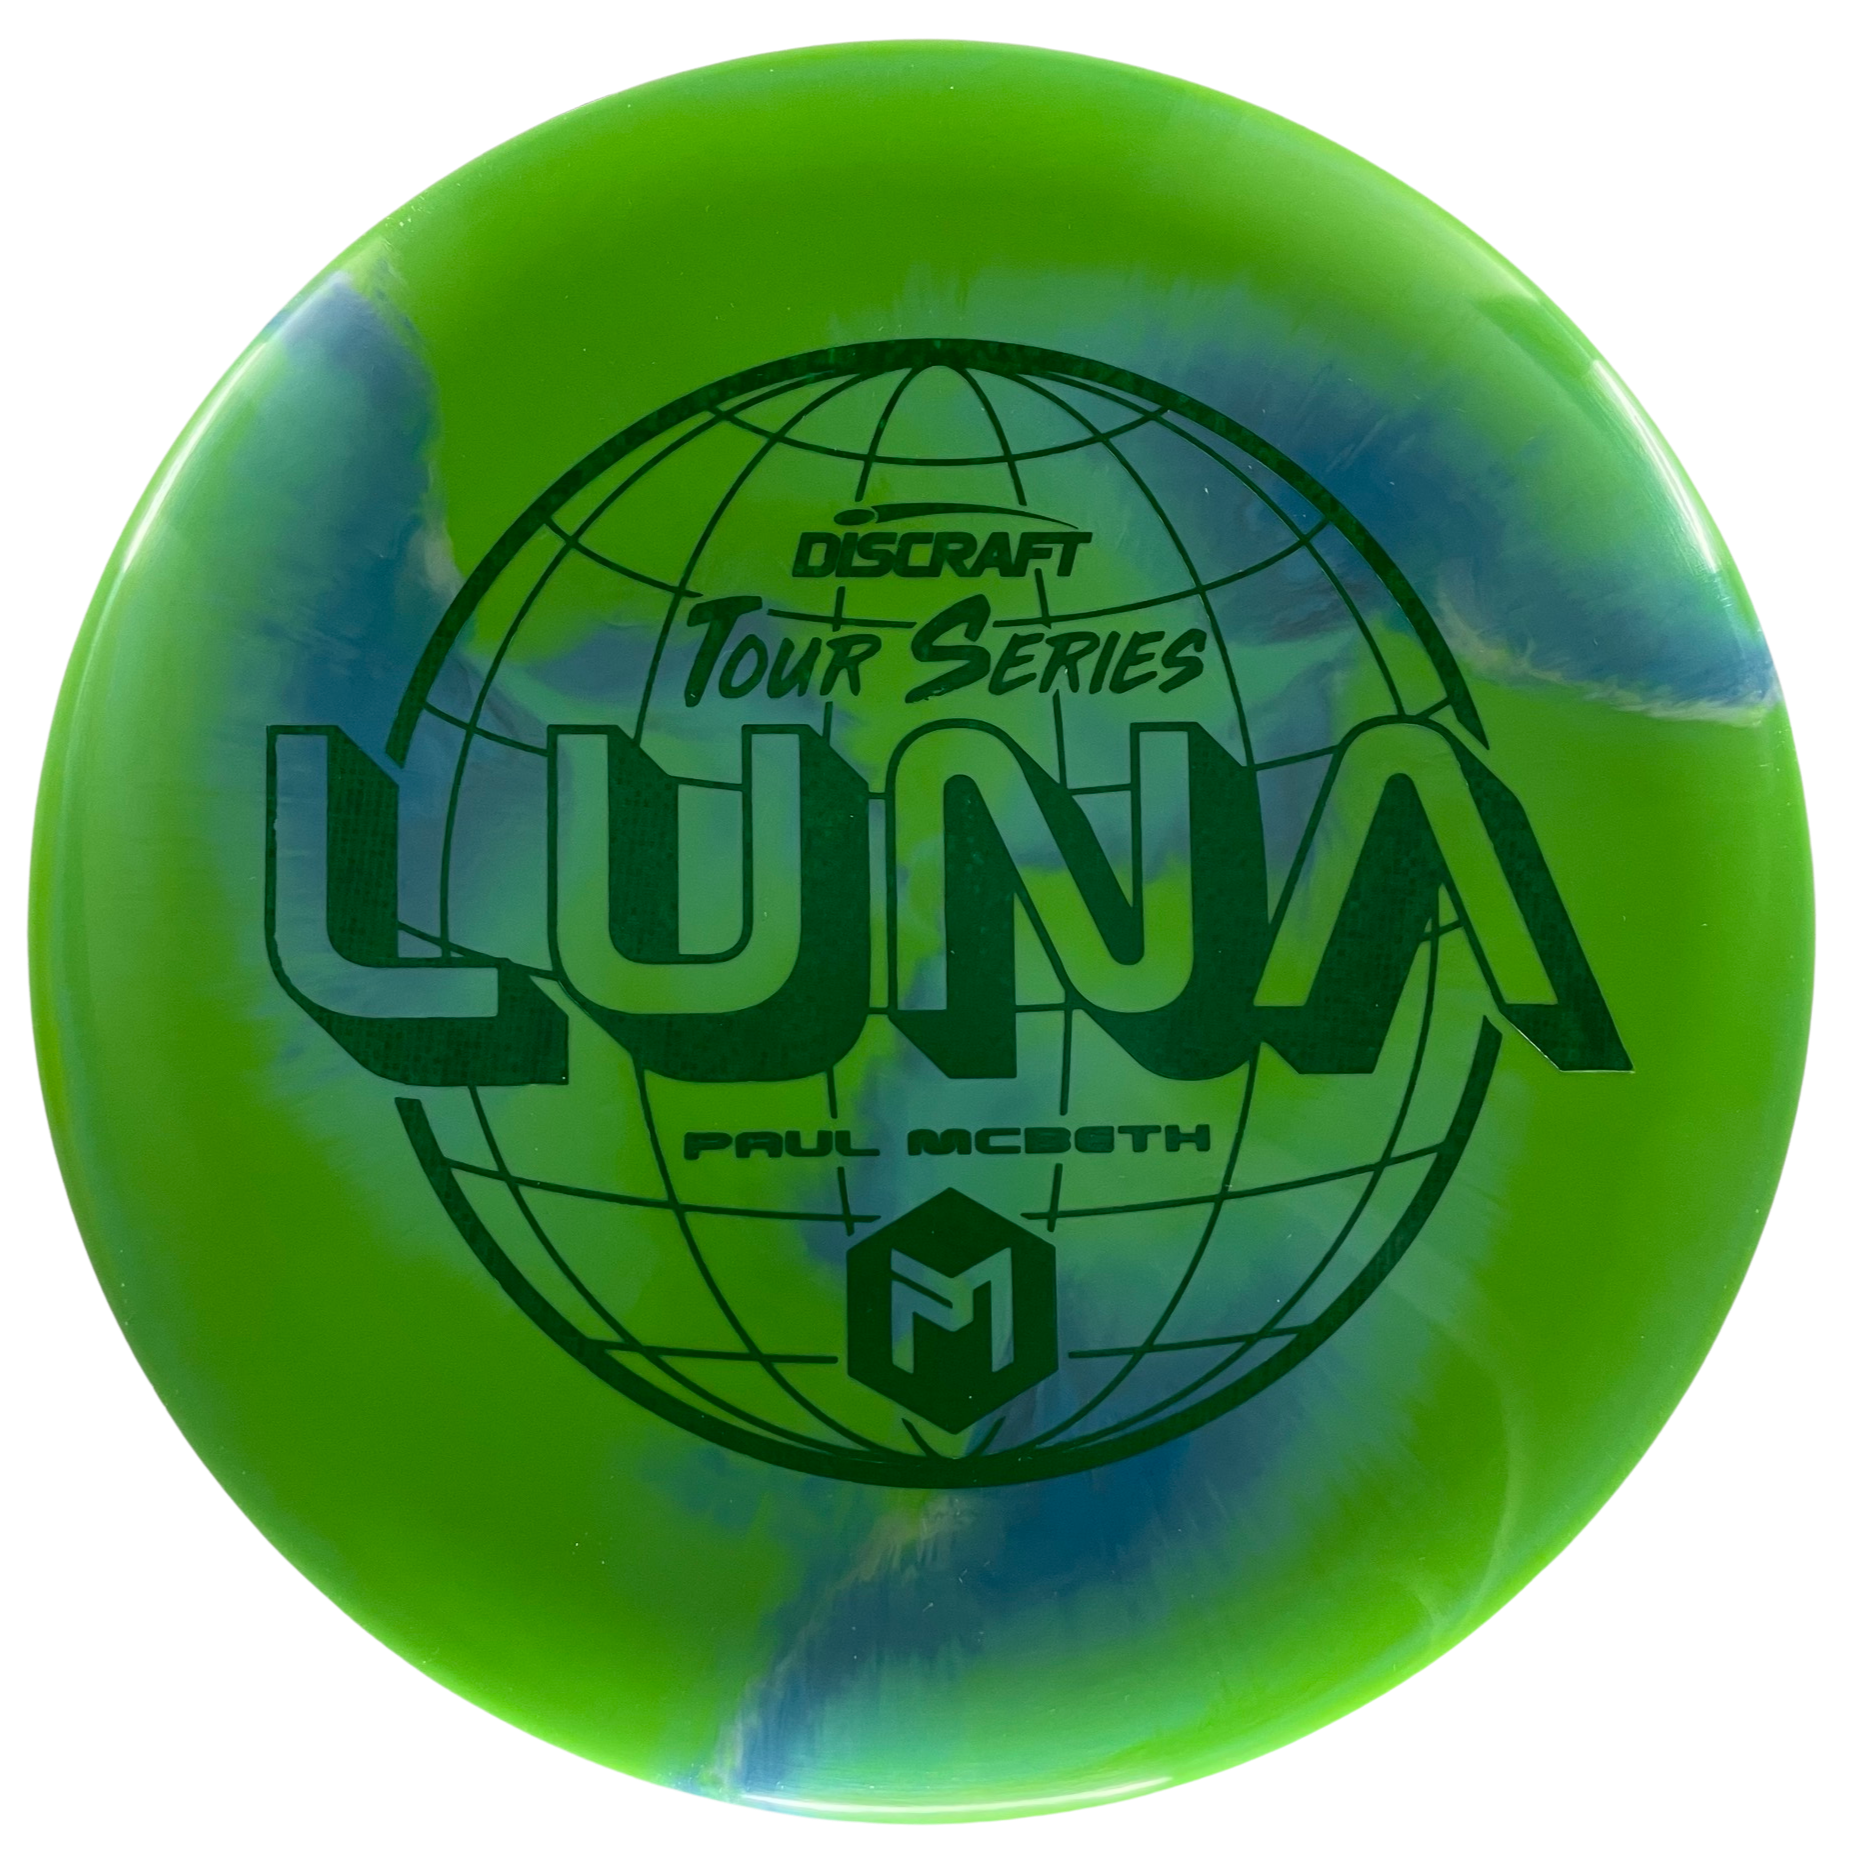 Discraft ESP Luna - Paul McBeth Tour Series